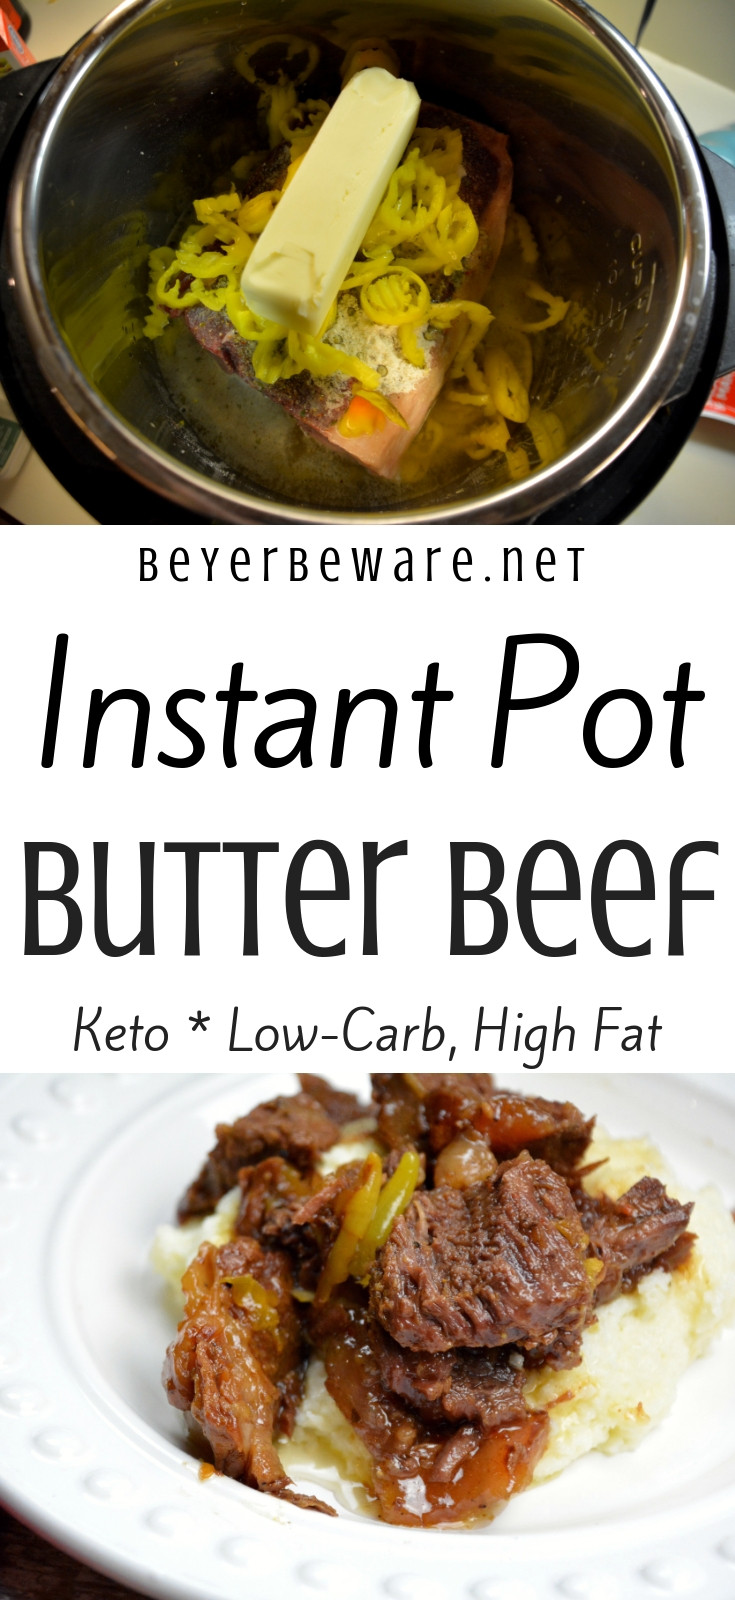 Instant Pot Roast Beef Keto
 Instant Pot Butter Beef Keto Low Carb Recipe Beyer Beware